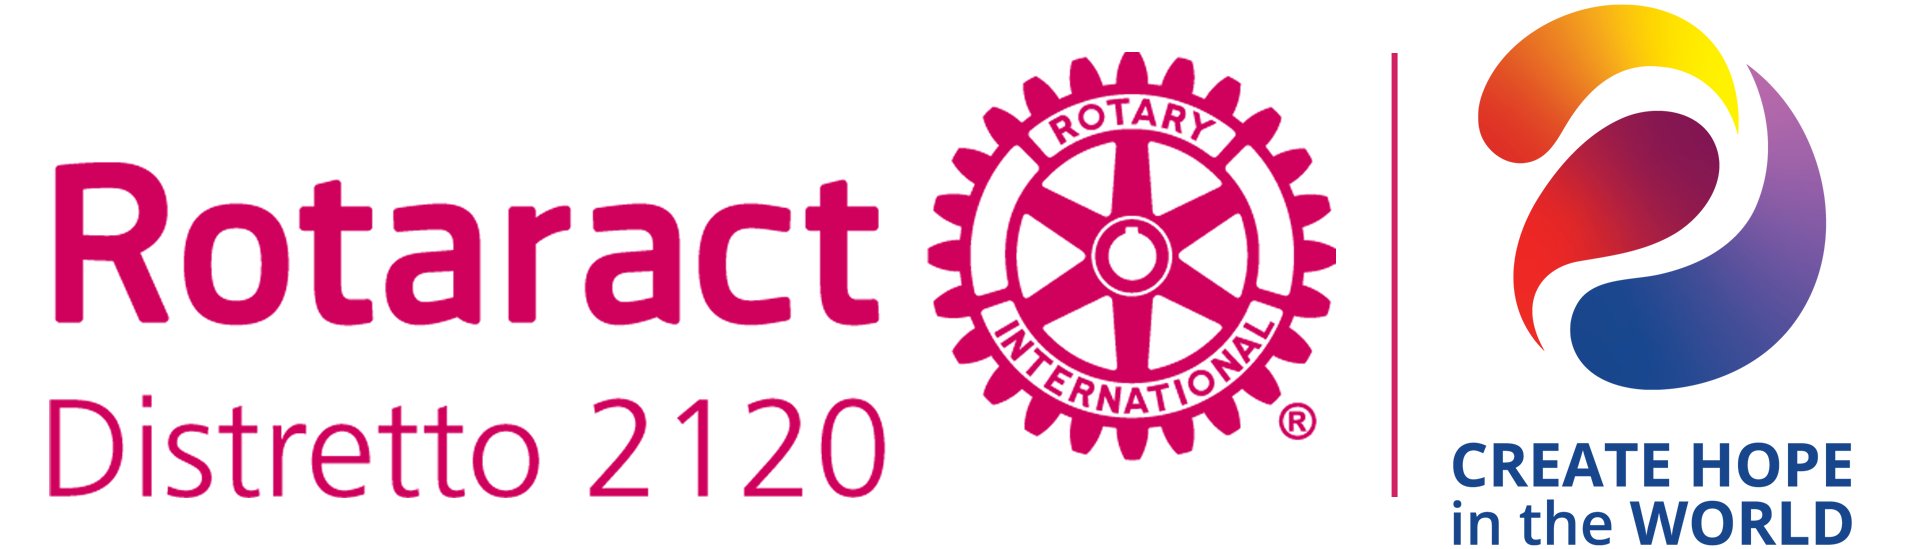 Distretto Rotaract 2120